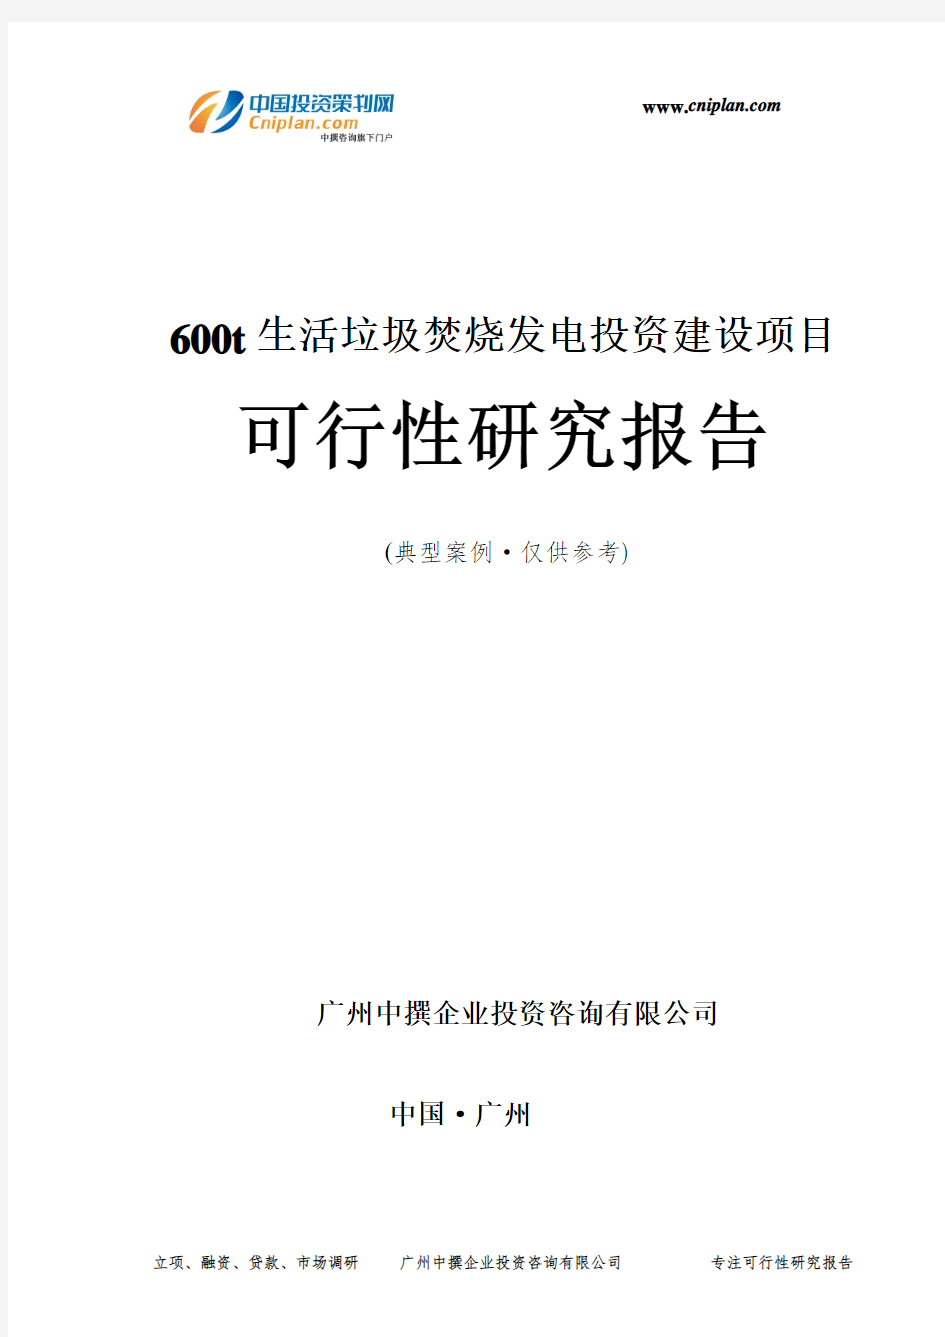 600t生活垃圾焚烧发电投资建设项目可行性研究报告-广州中撰咨询